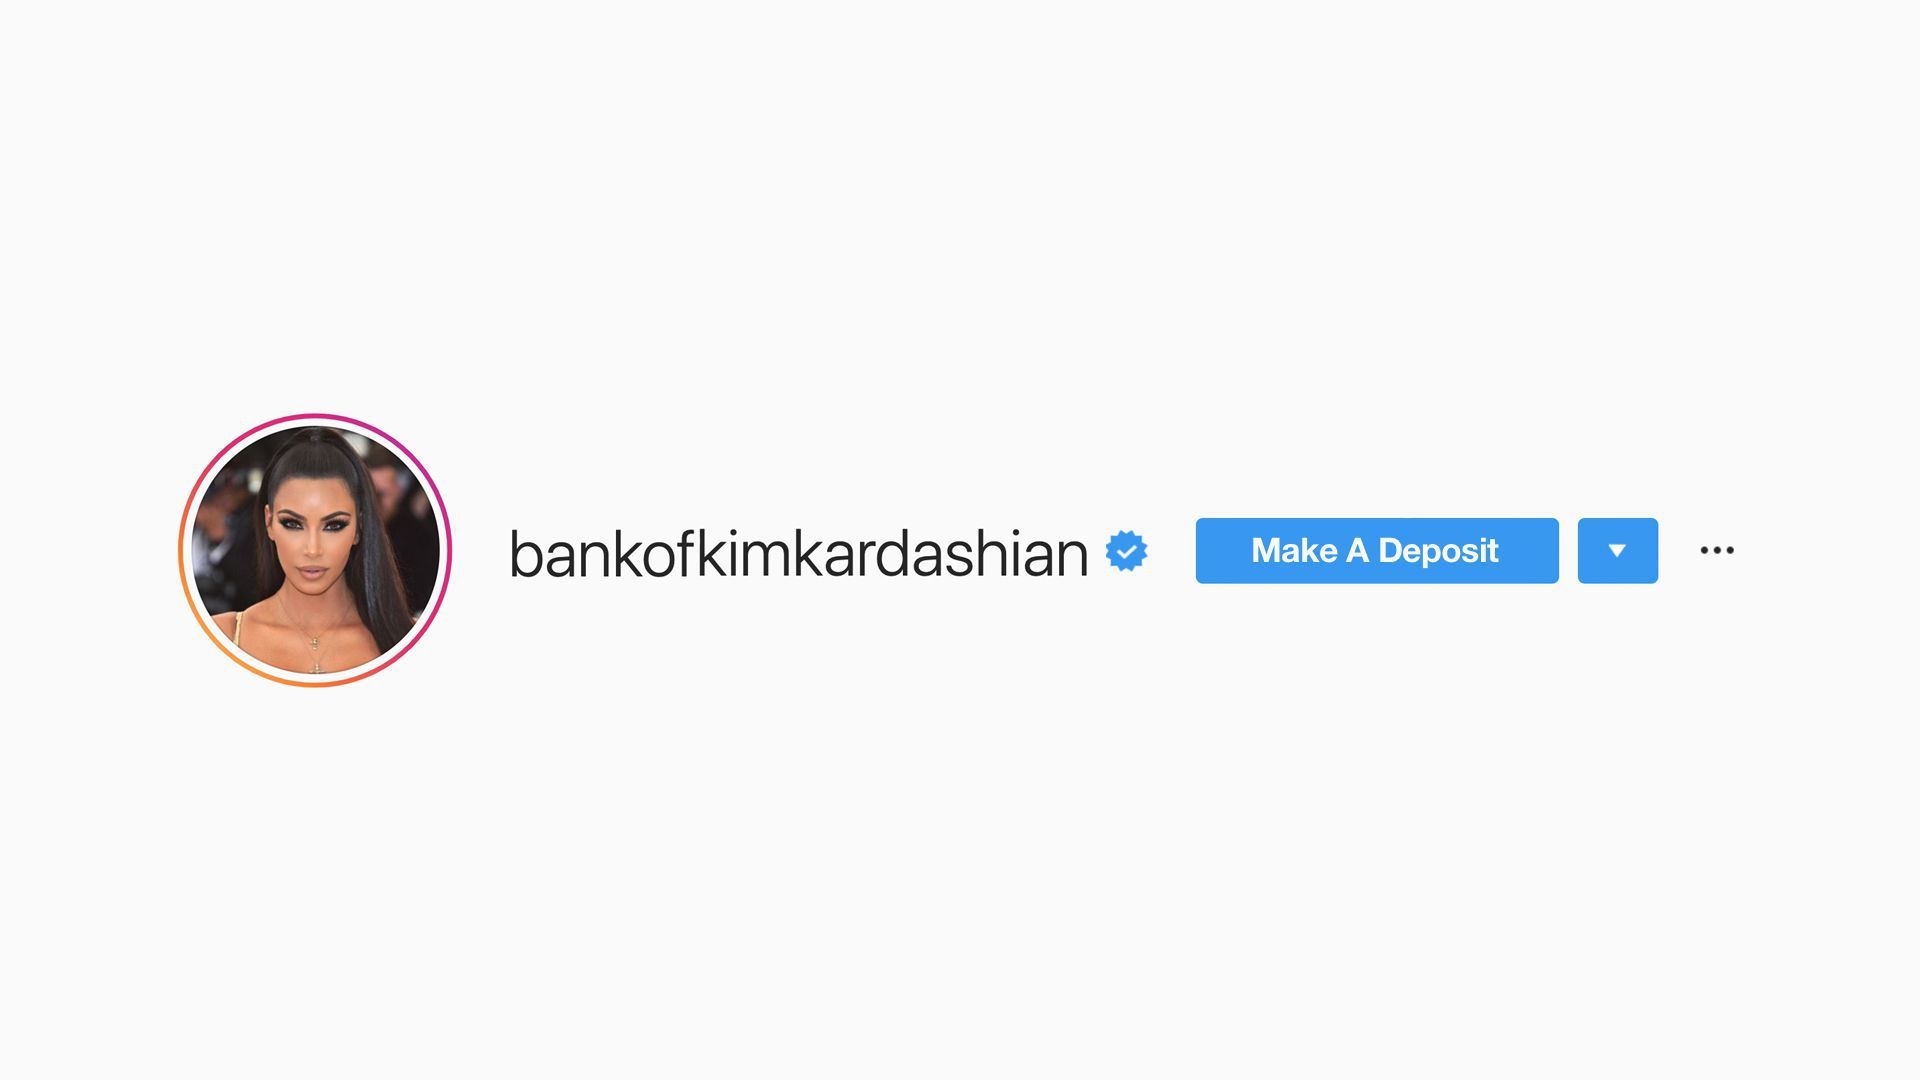 Illustration of the bankofkimkardashian